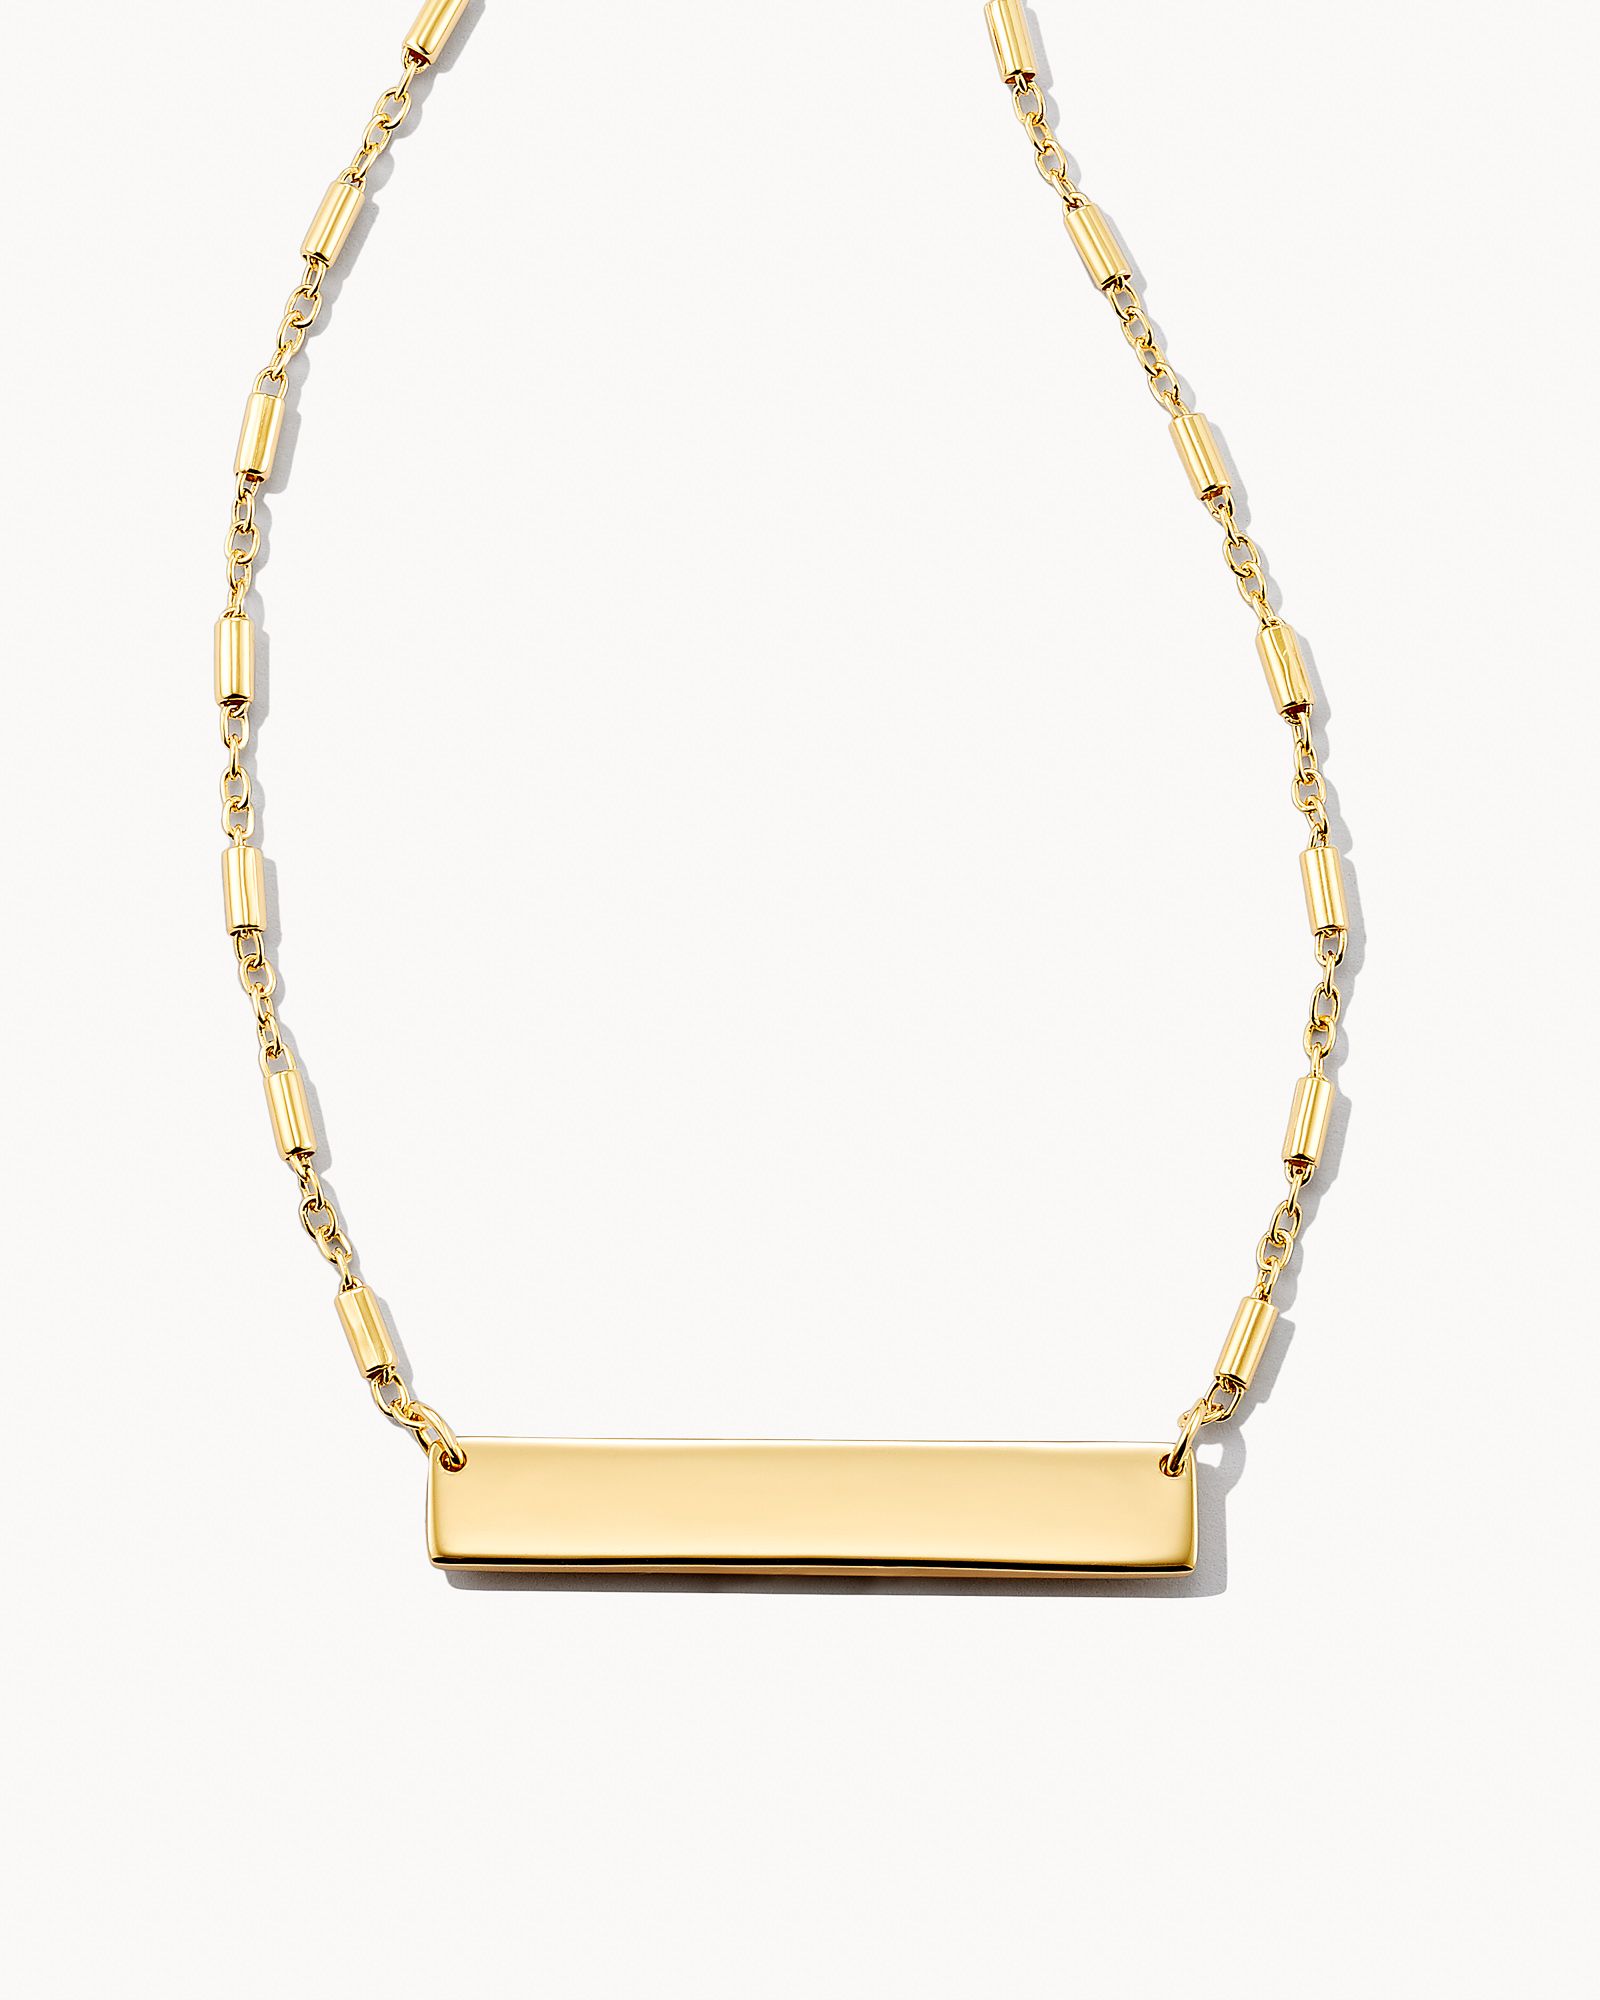 Allison Pendant Necklace in 18k Yellow Gold Vermeil | Kendra Scott | Kendra Scott